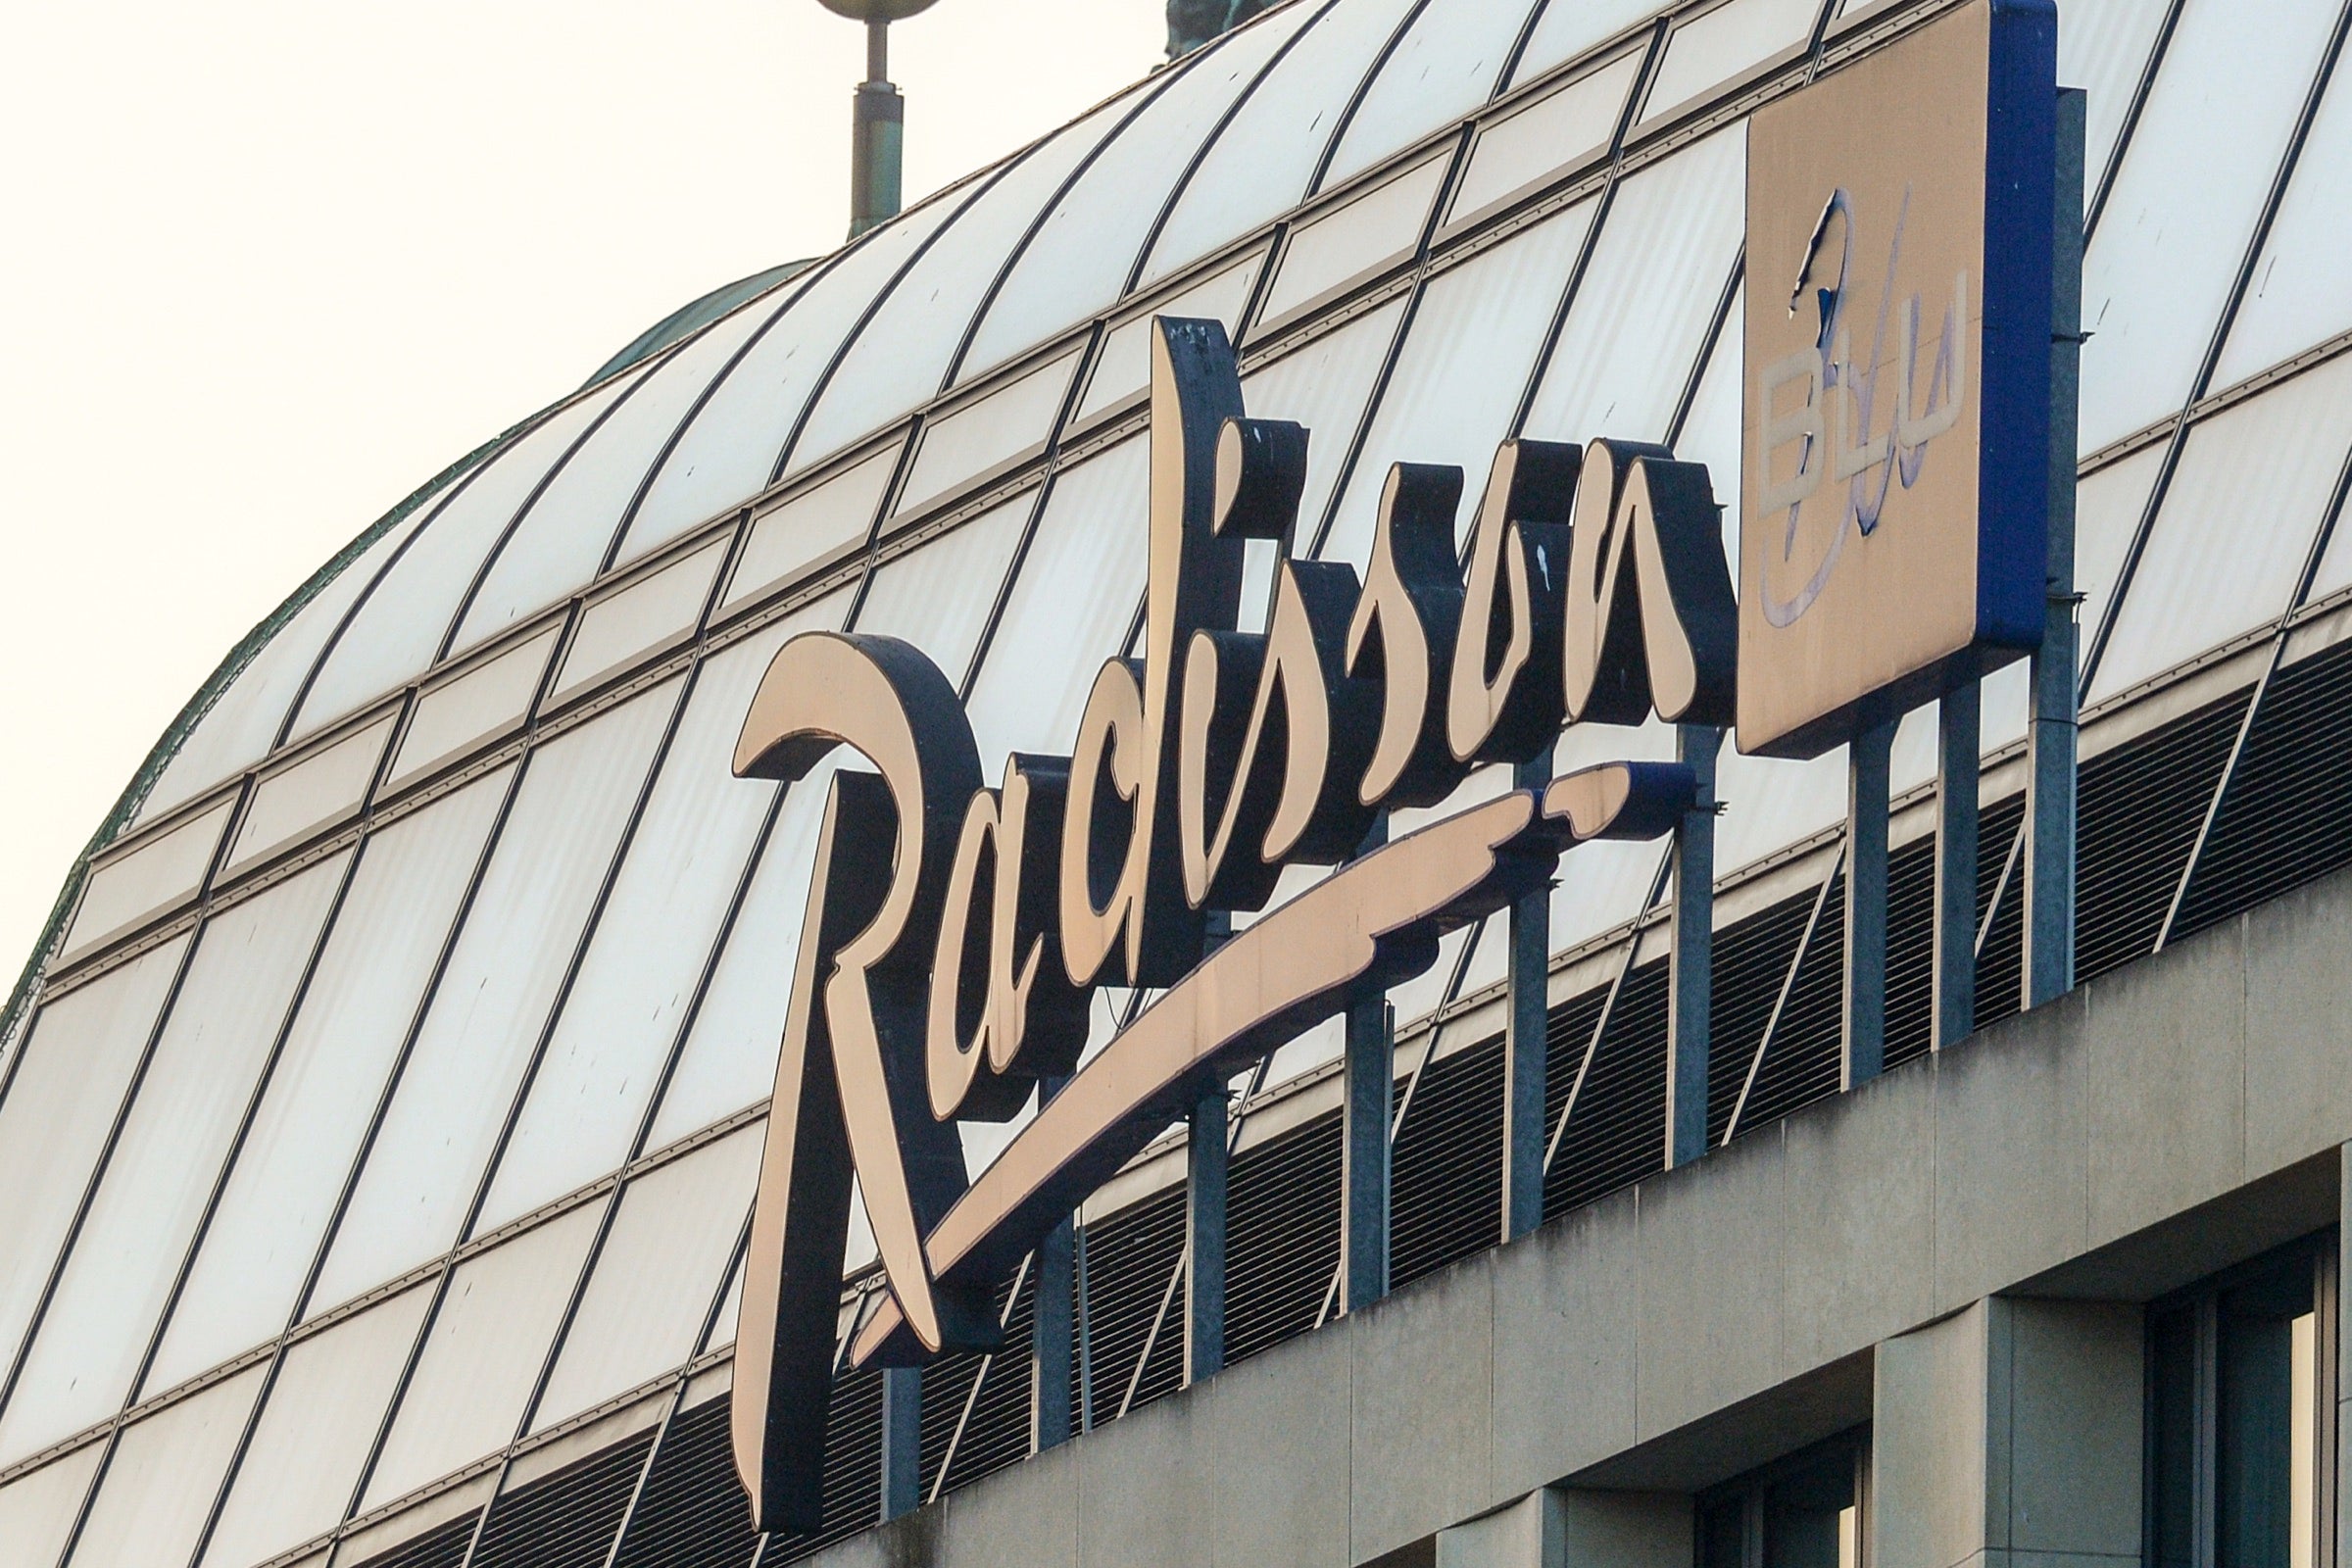 Radisson Blu sign on a building